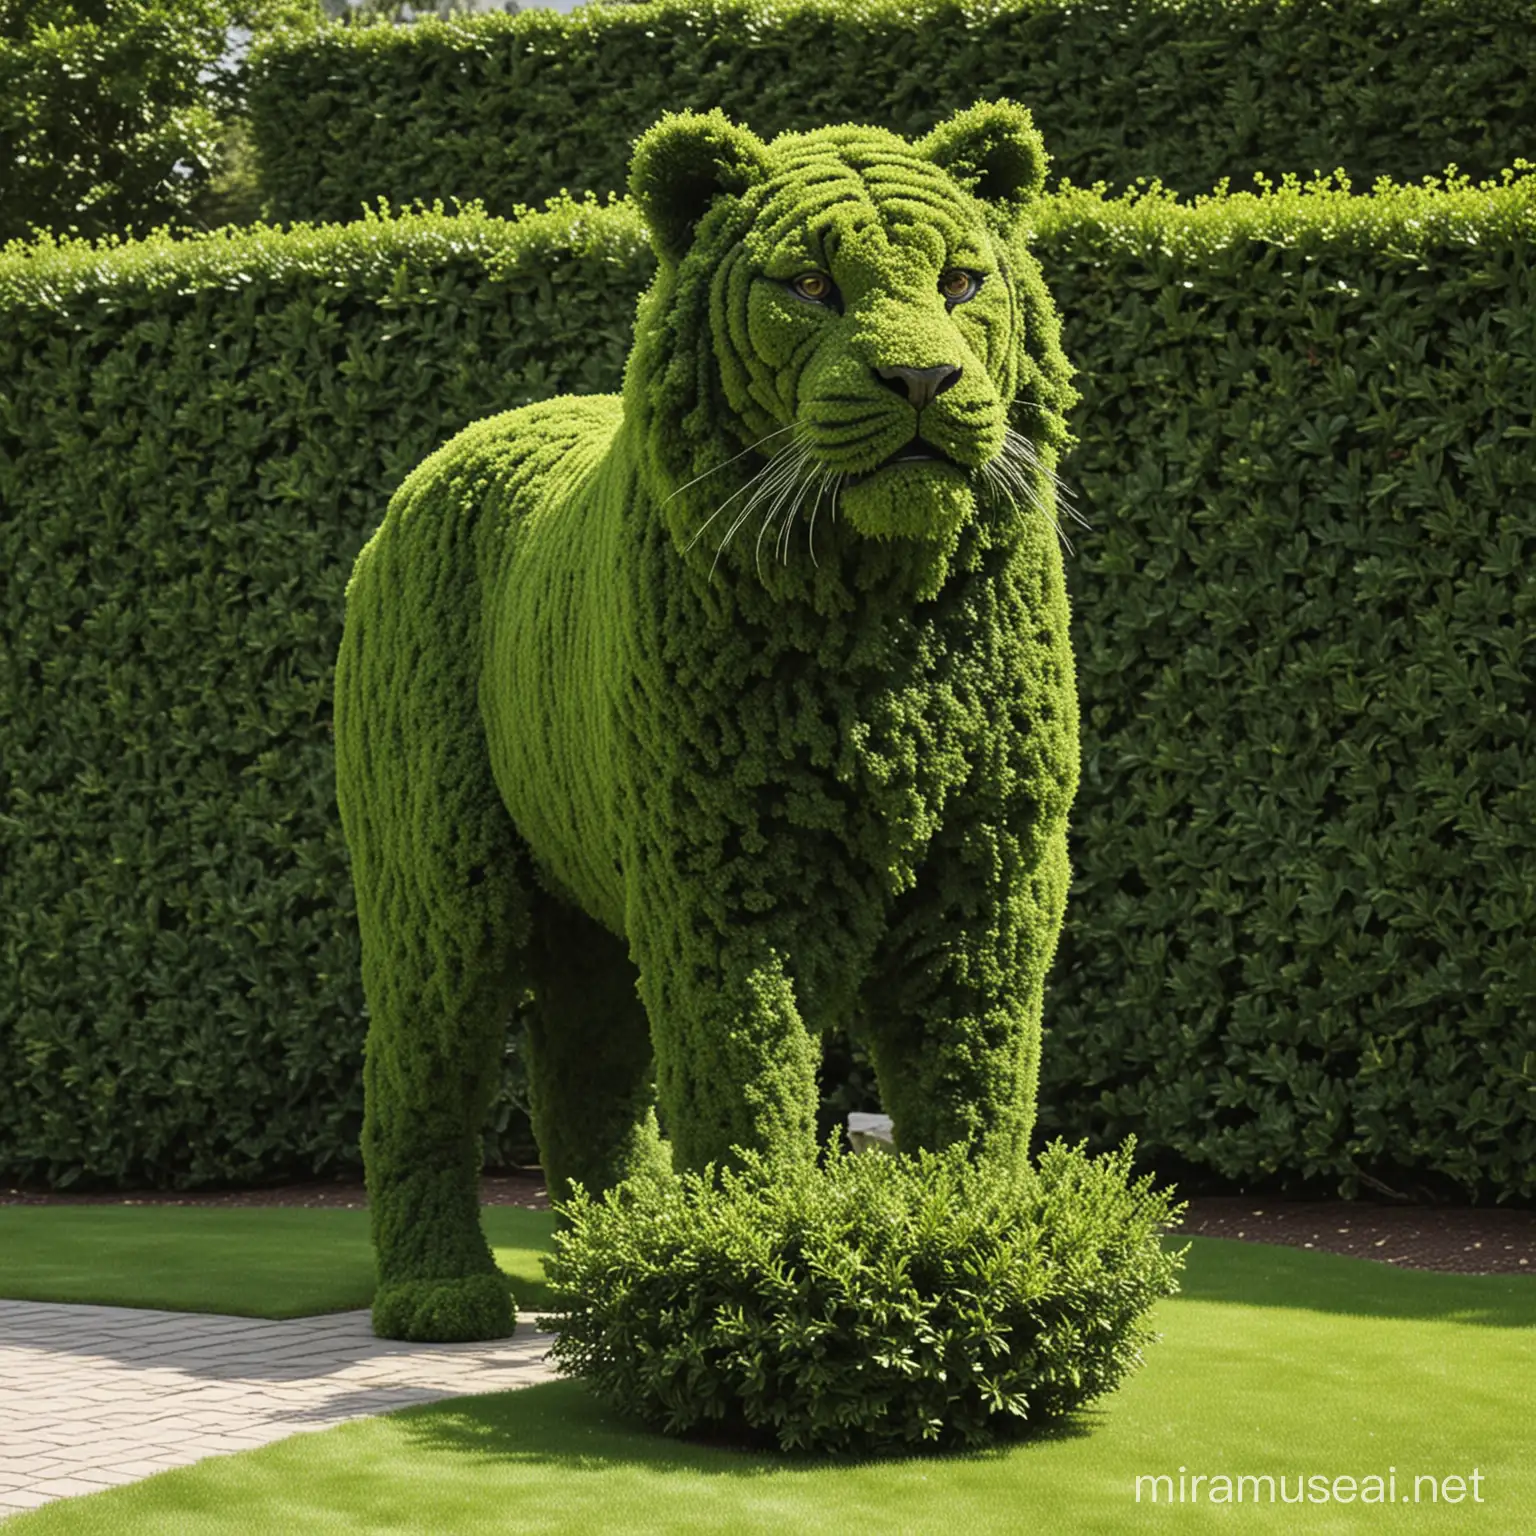 Green Topiary Bush Resembling a Tiger Sculpture